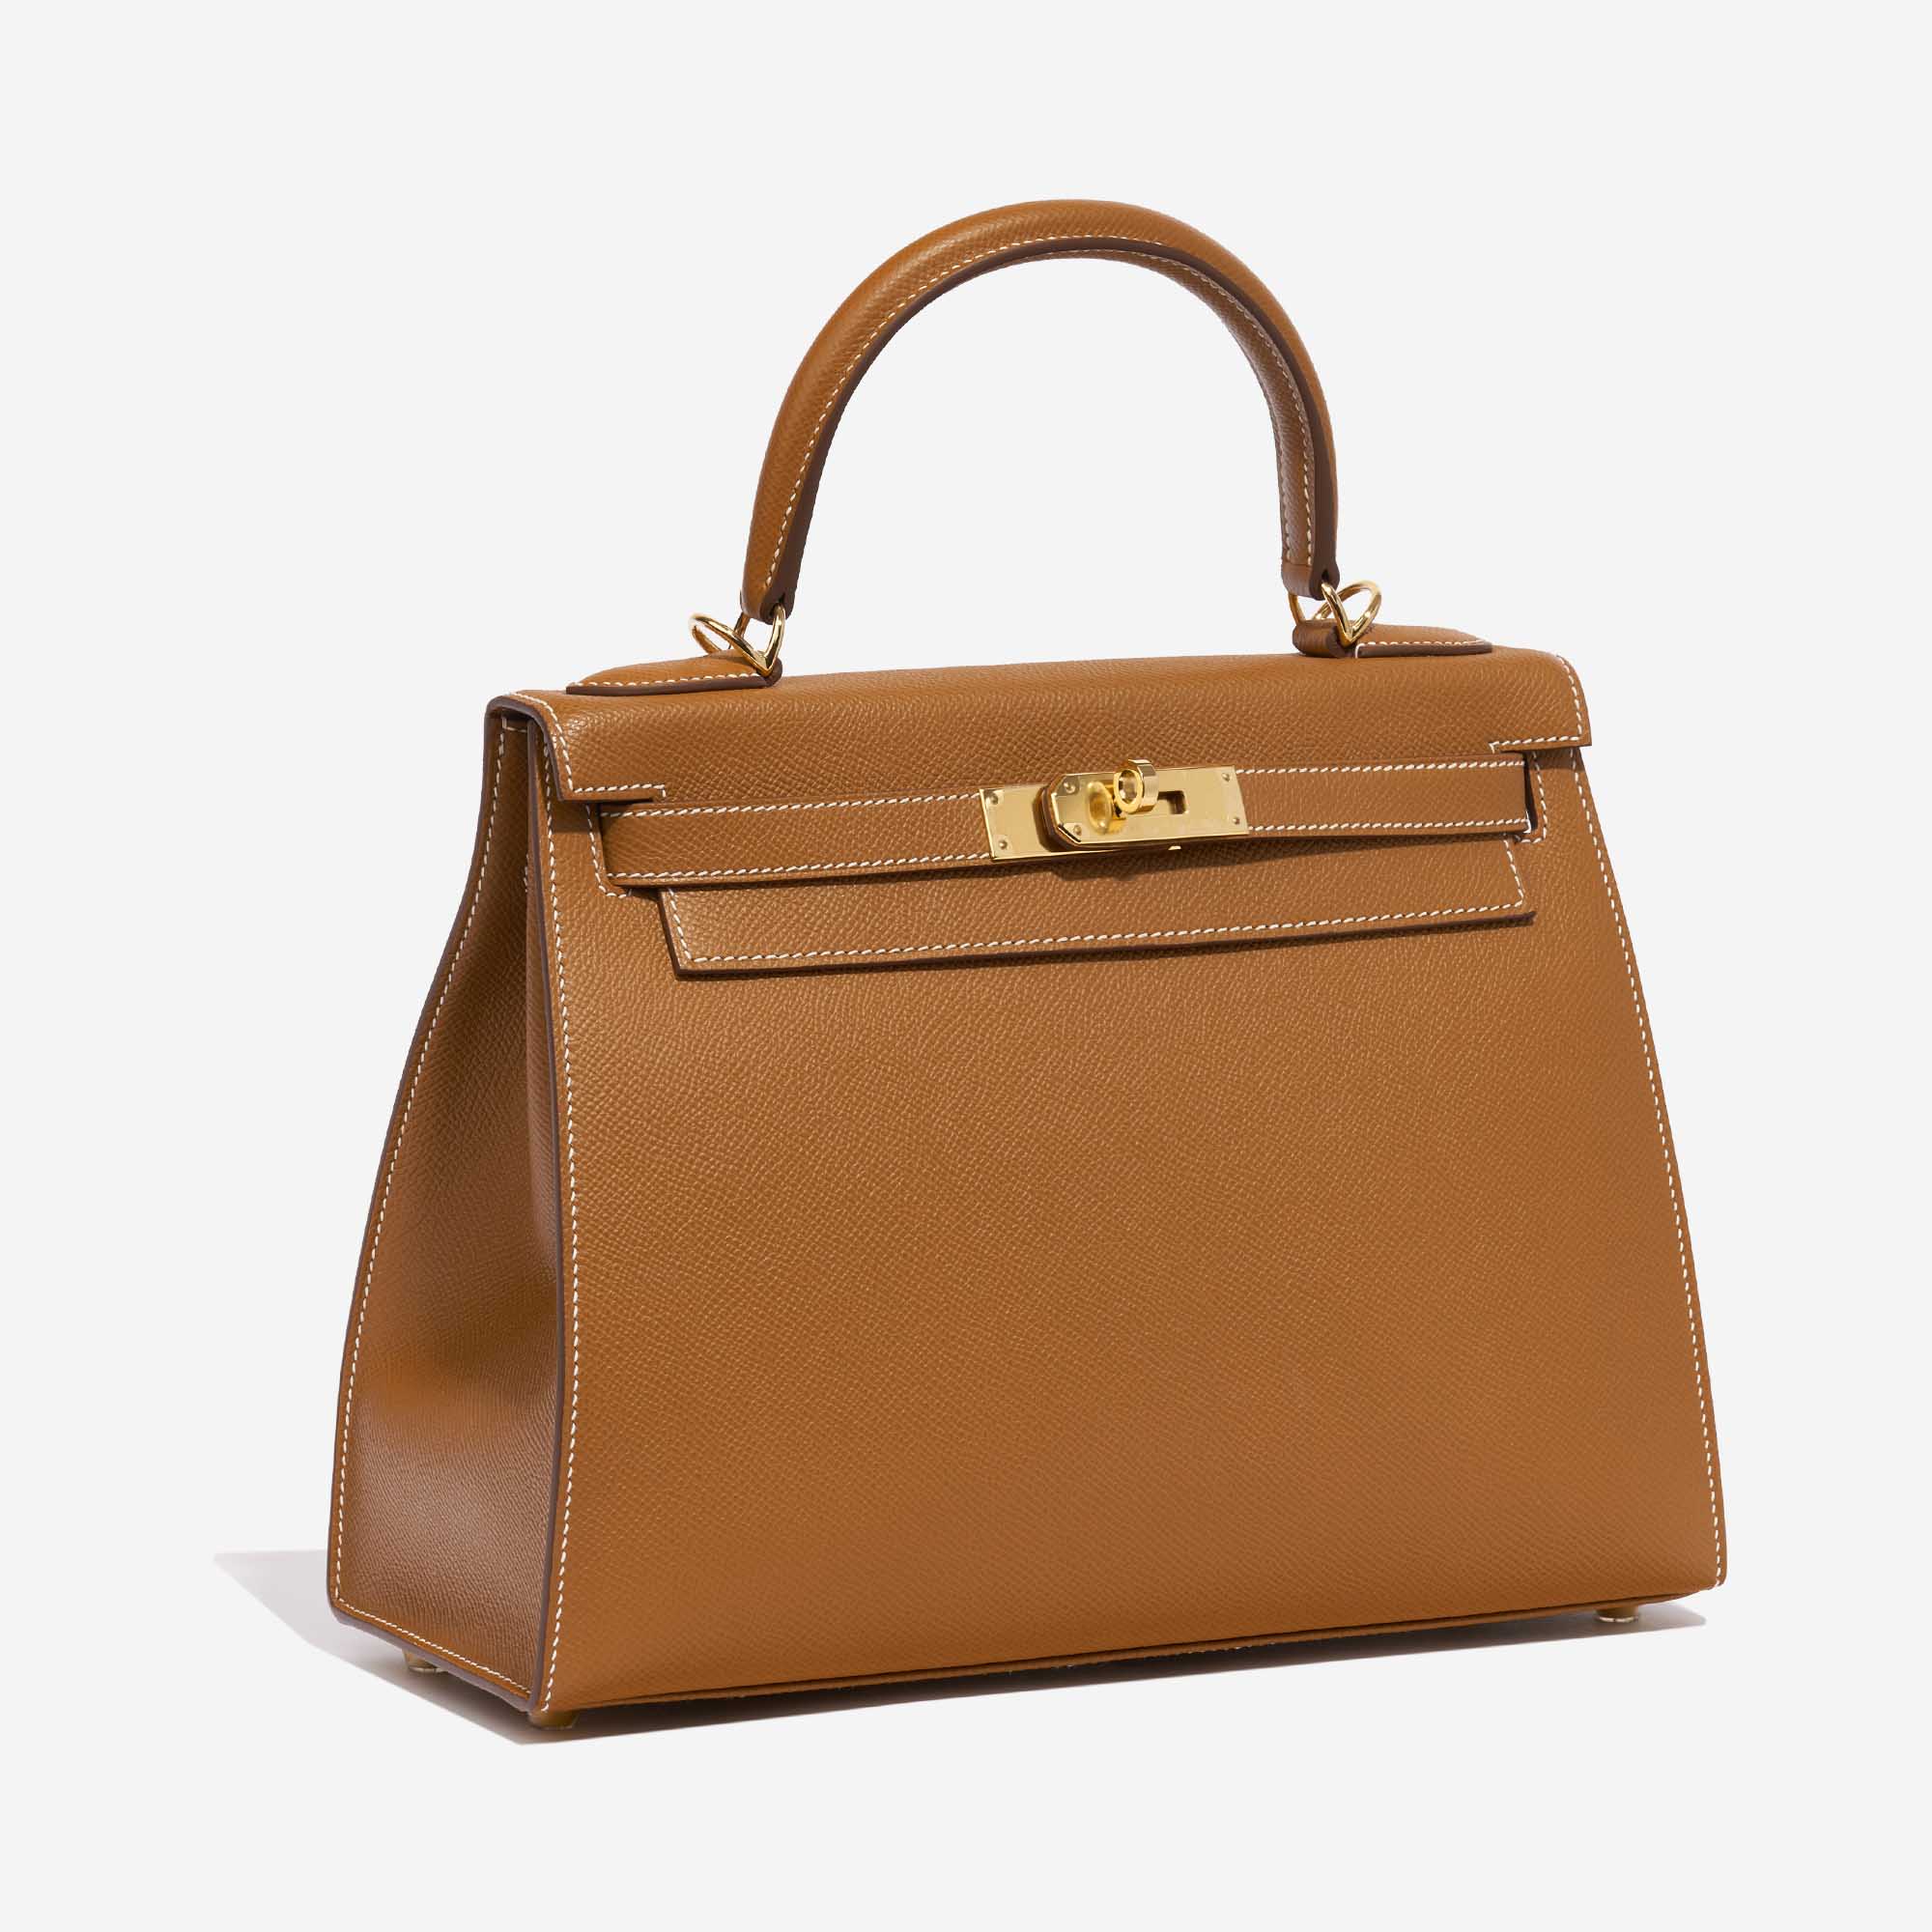 Hermès Kelly 28 Leather Handbag